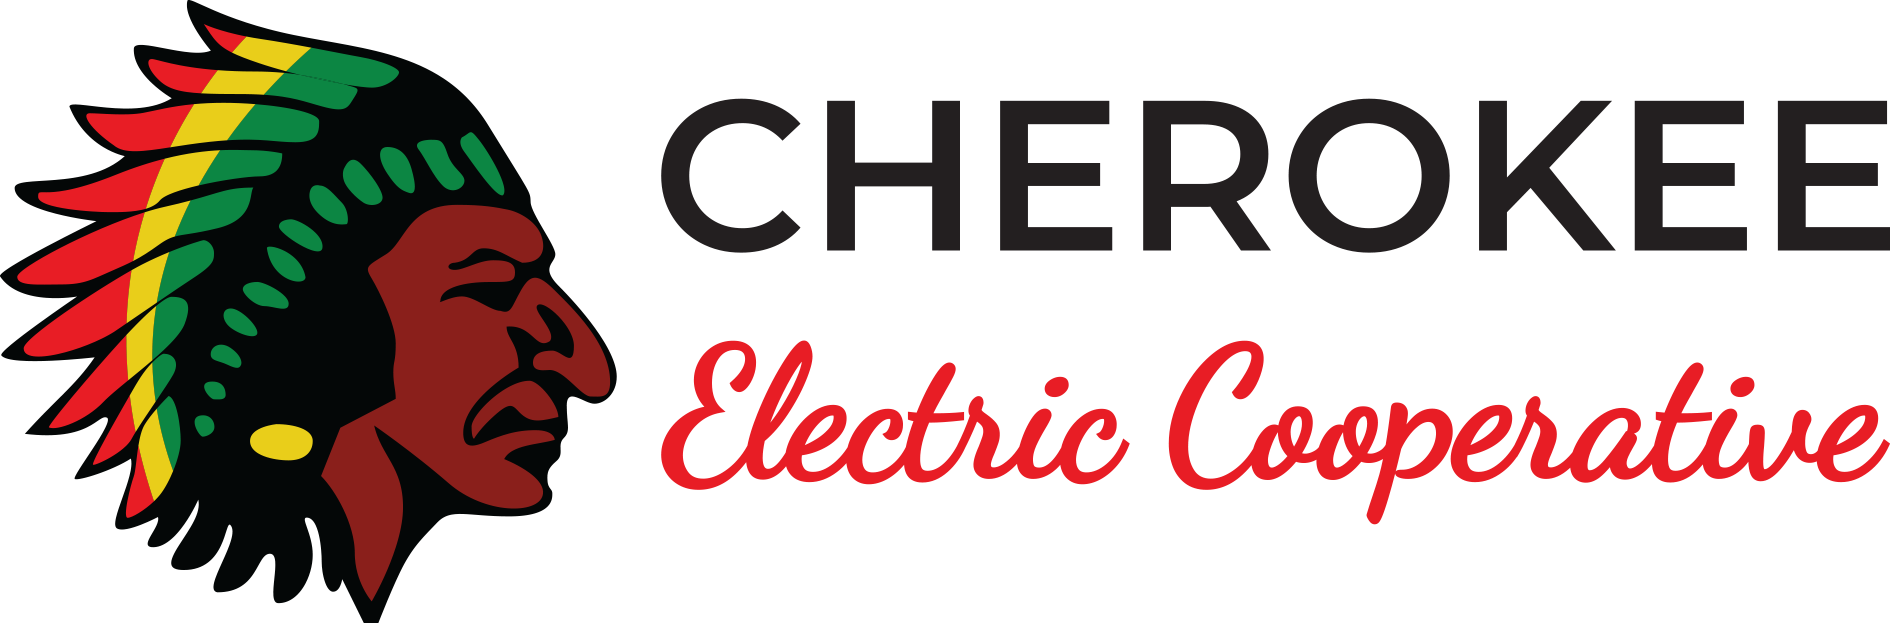 Cherokee Electric Cooperative Logo - Cherokee Electric Co-op (1890x623)